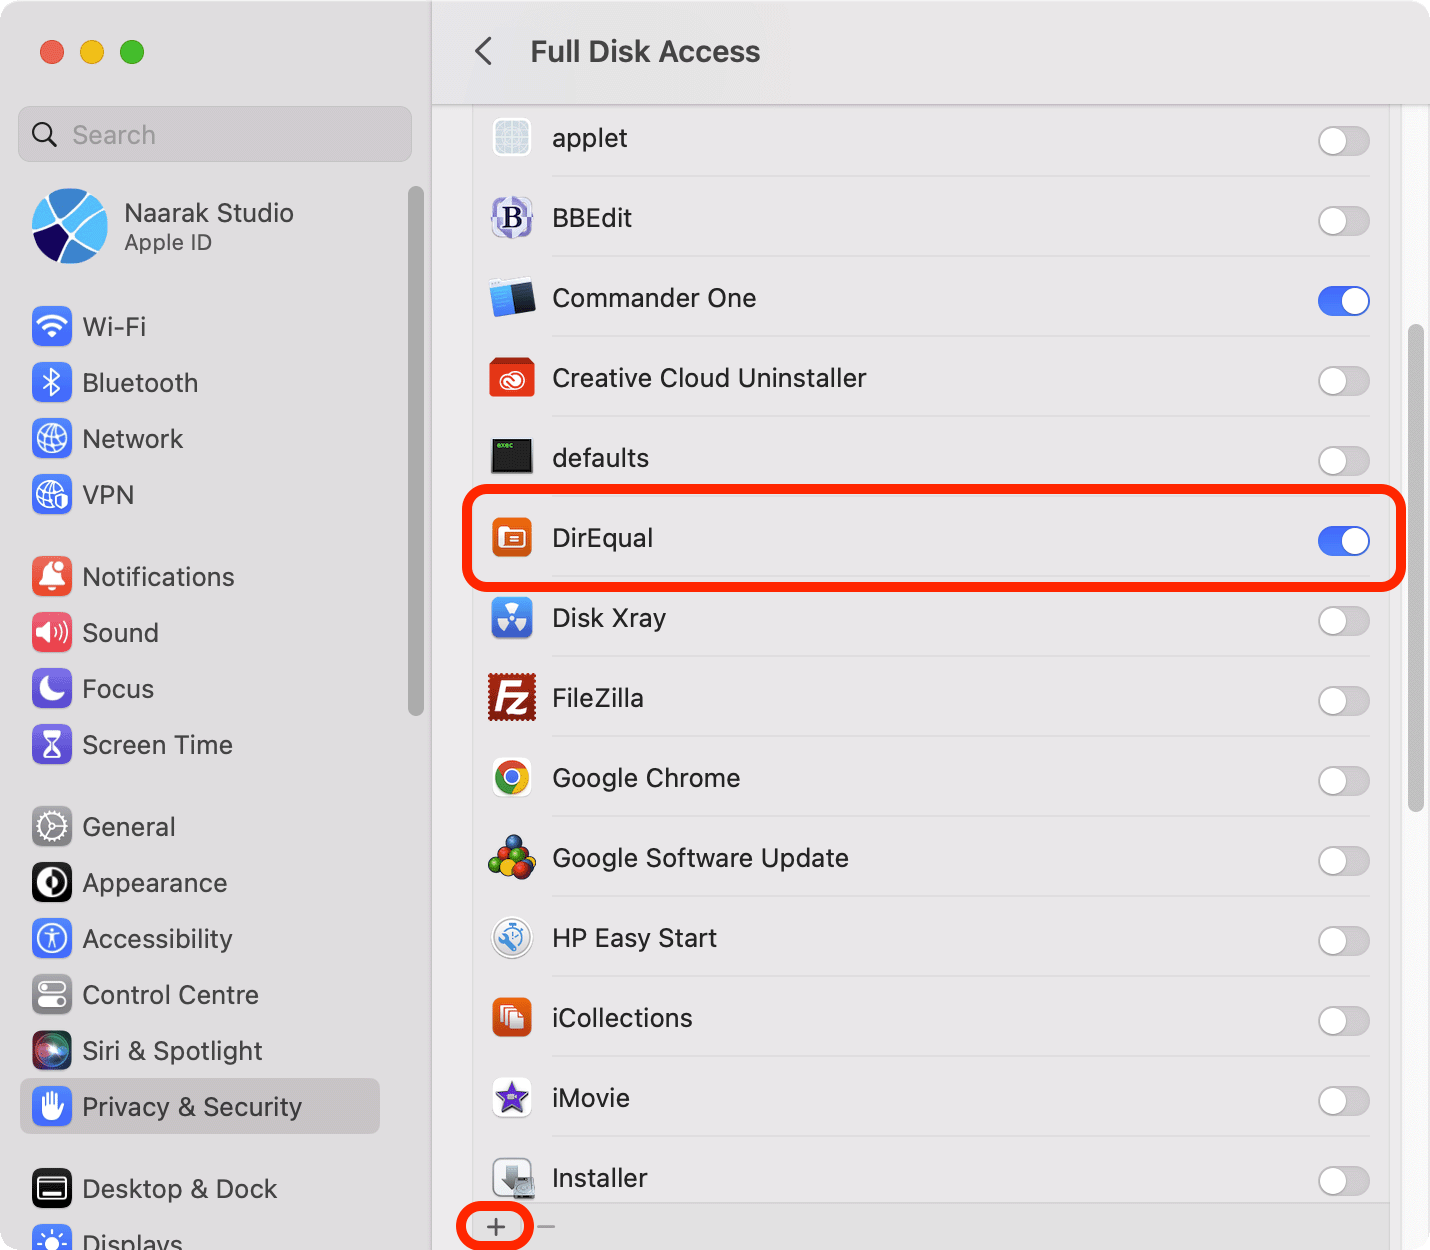 Full disk access